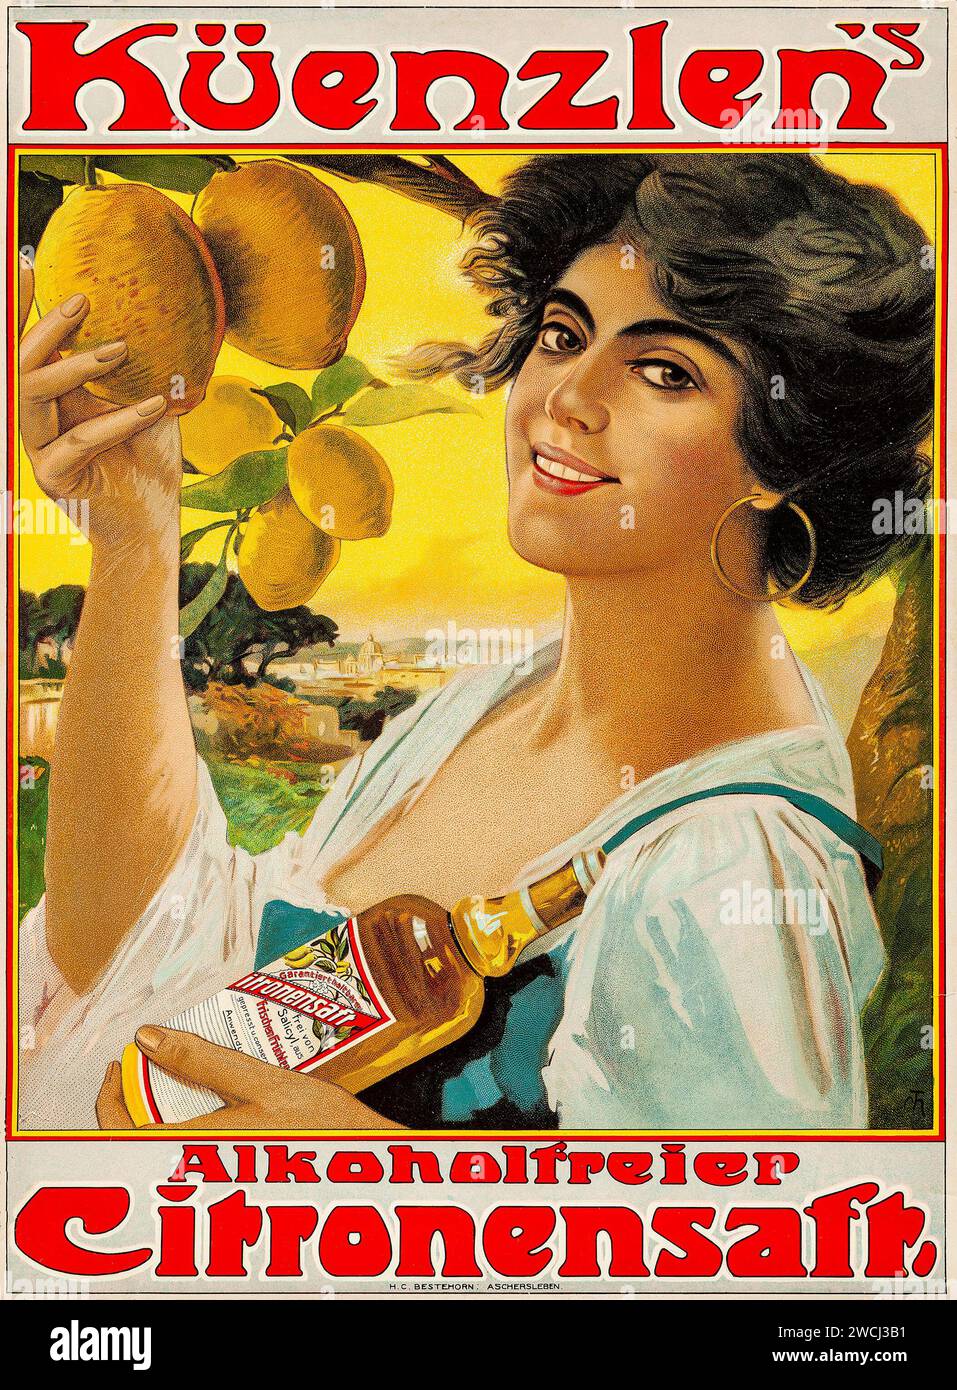 Küenzlen's Citronensaft (c. Early 1910s) German Advertising Poster - unknown artist - lemonade advertisement Stock Photo